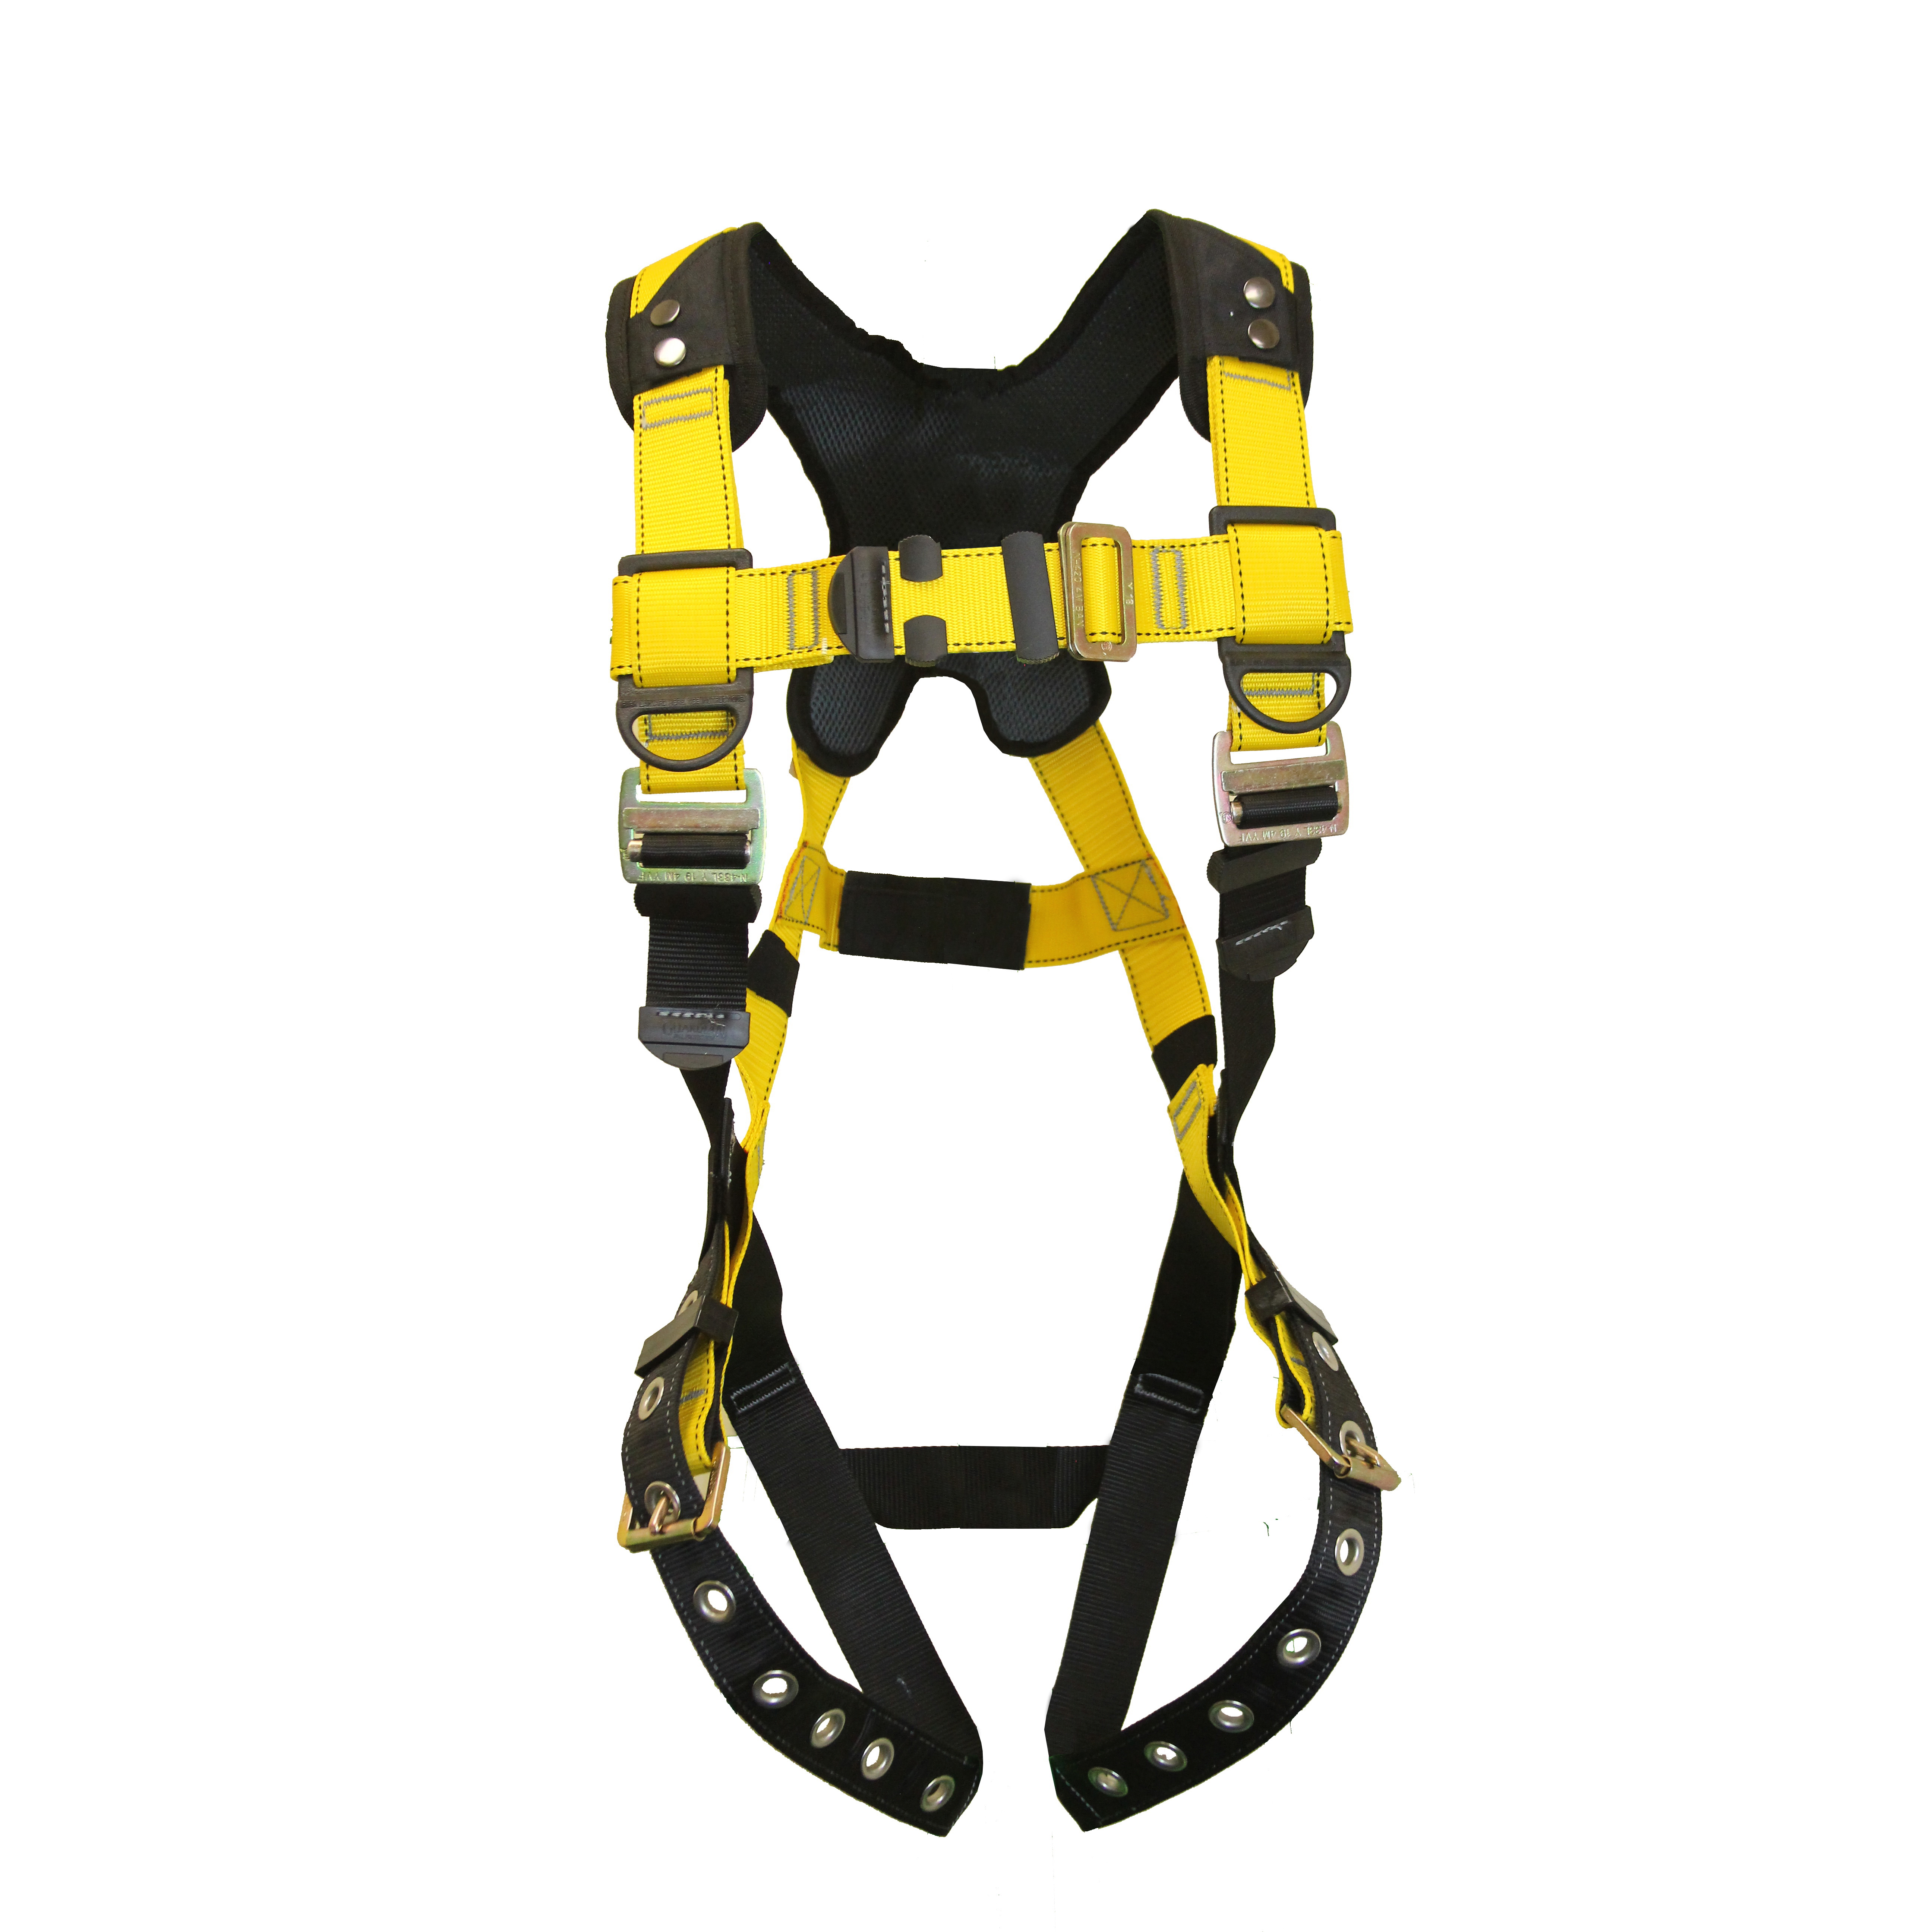 3 Series 37106 Full Body Harness, XL/2XL, 130 to 420 lb, Polyester Webbing, Black/Yellow